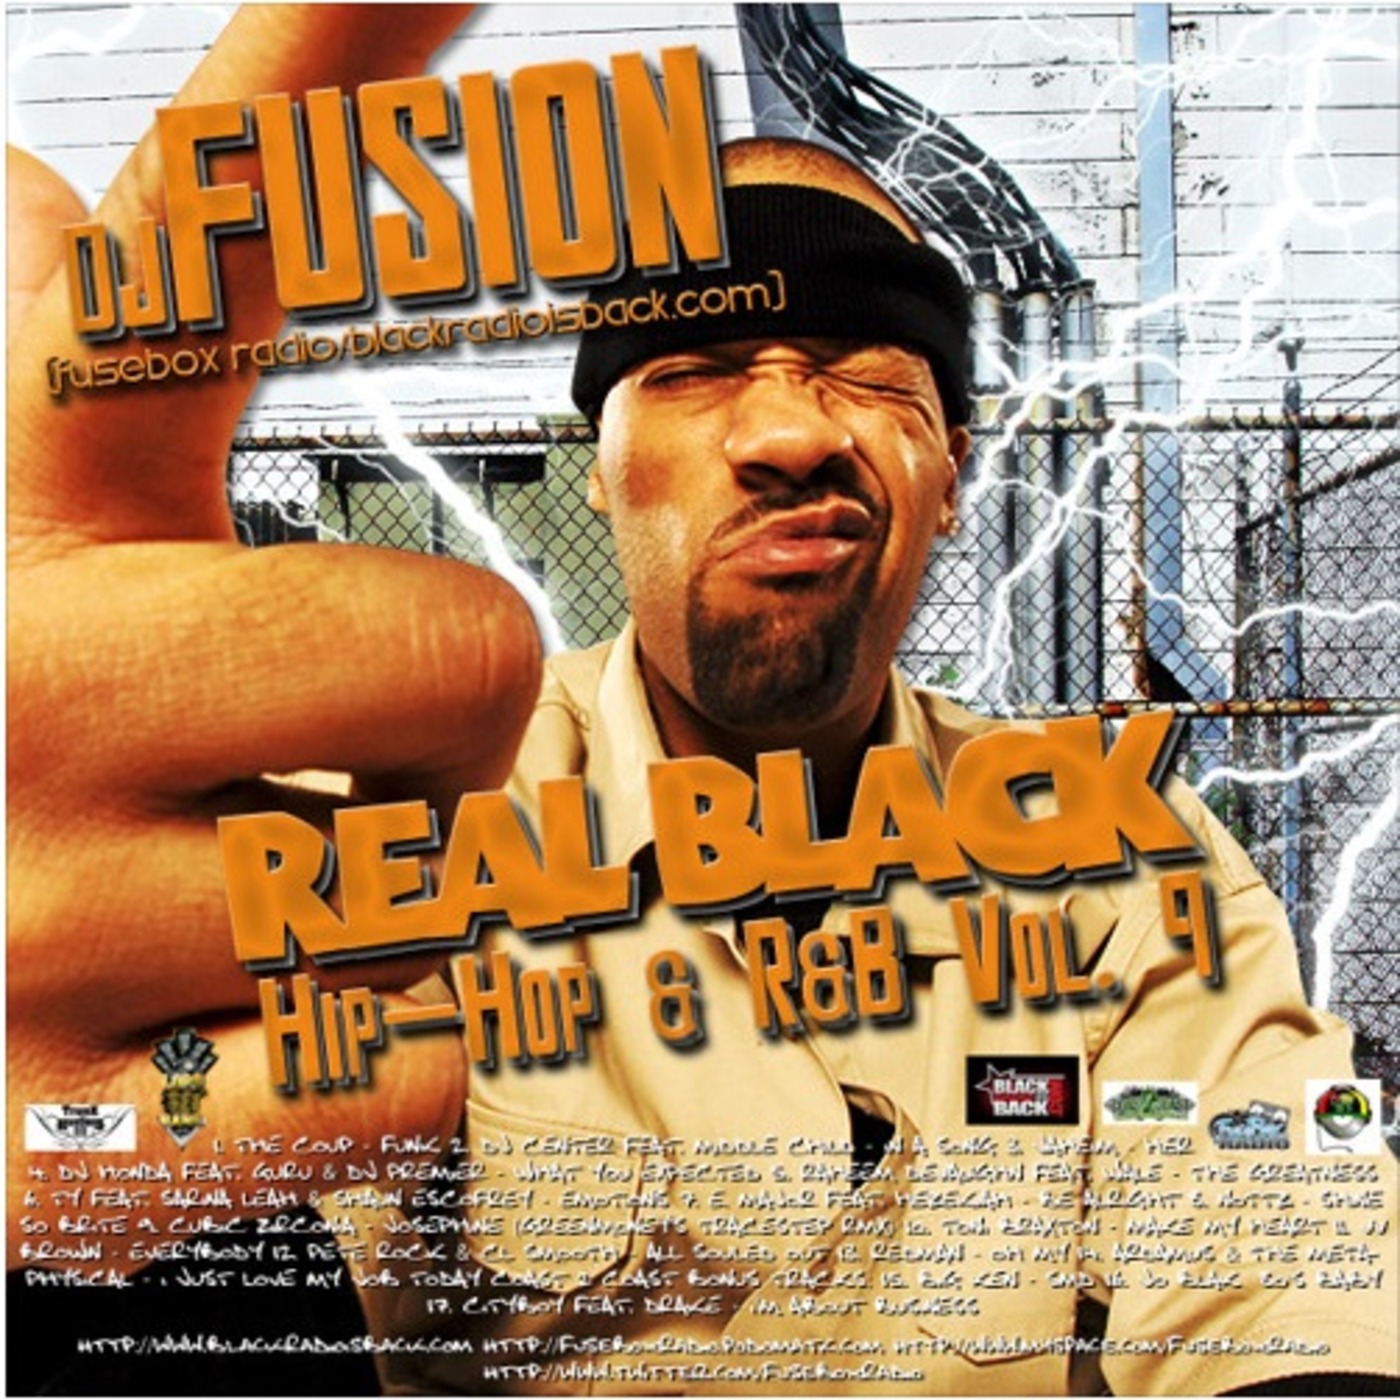 FuseBox Radio #495 - Return of Real Black Radio Vol. 9 by DJ Fusion [Week of August 10, 2016: FLASHBACK MIXTAPE EPISODE]